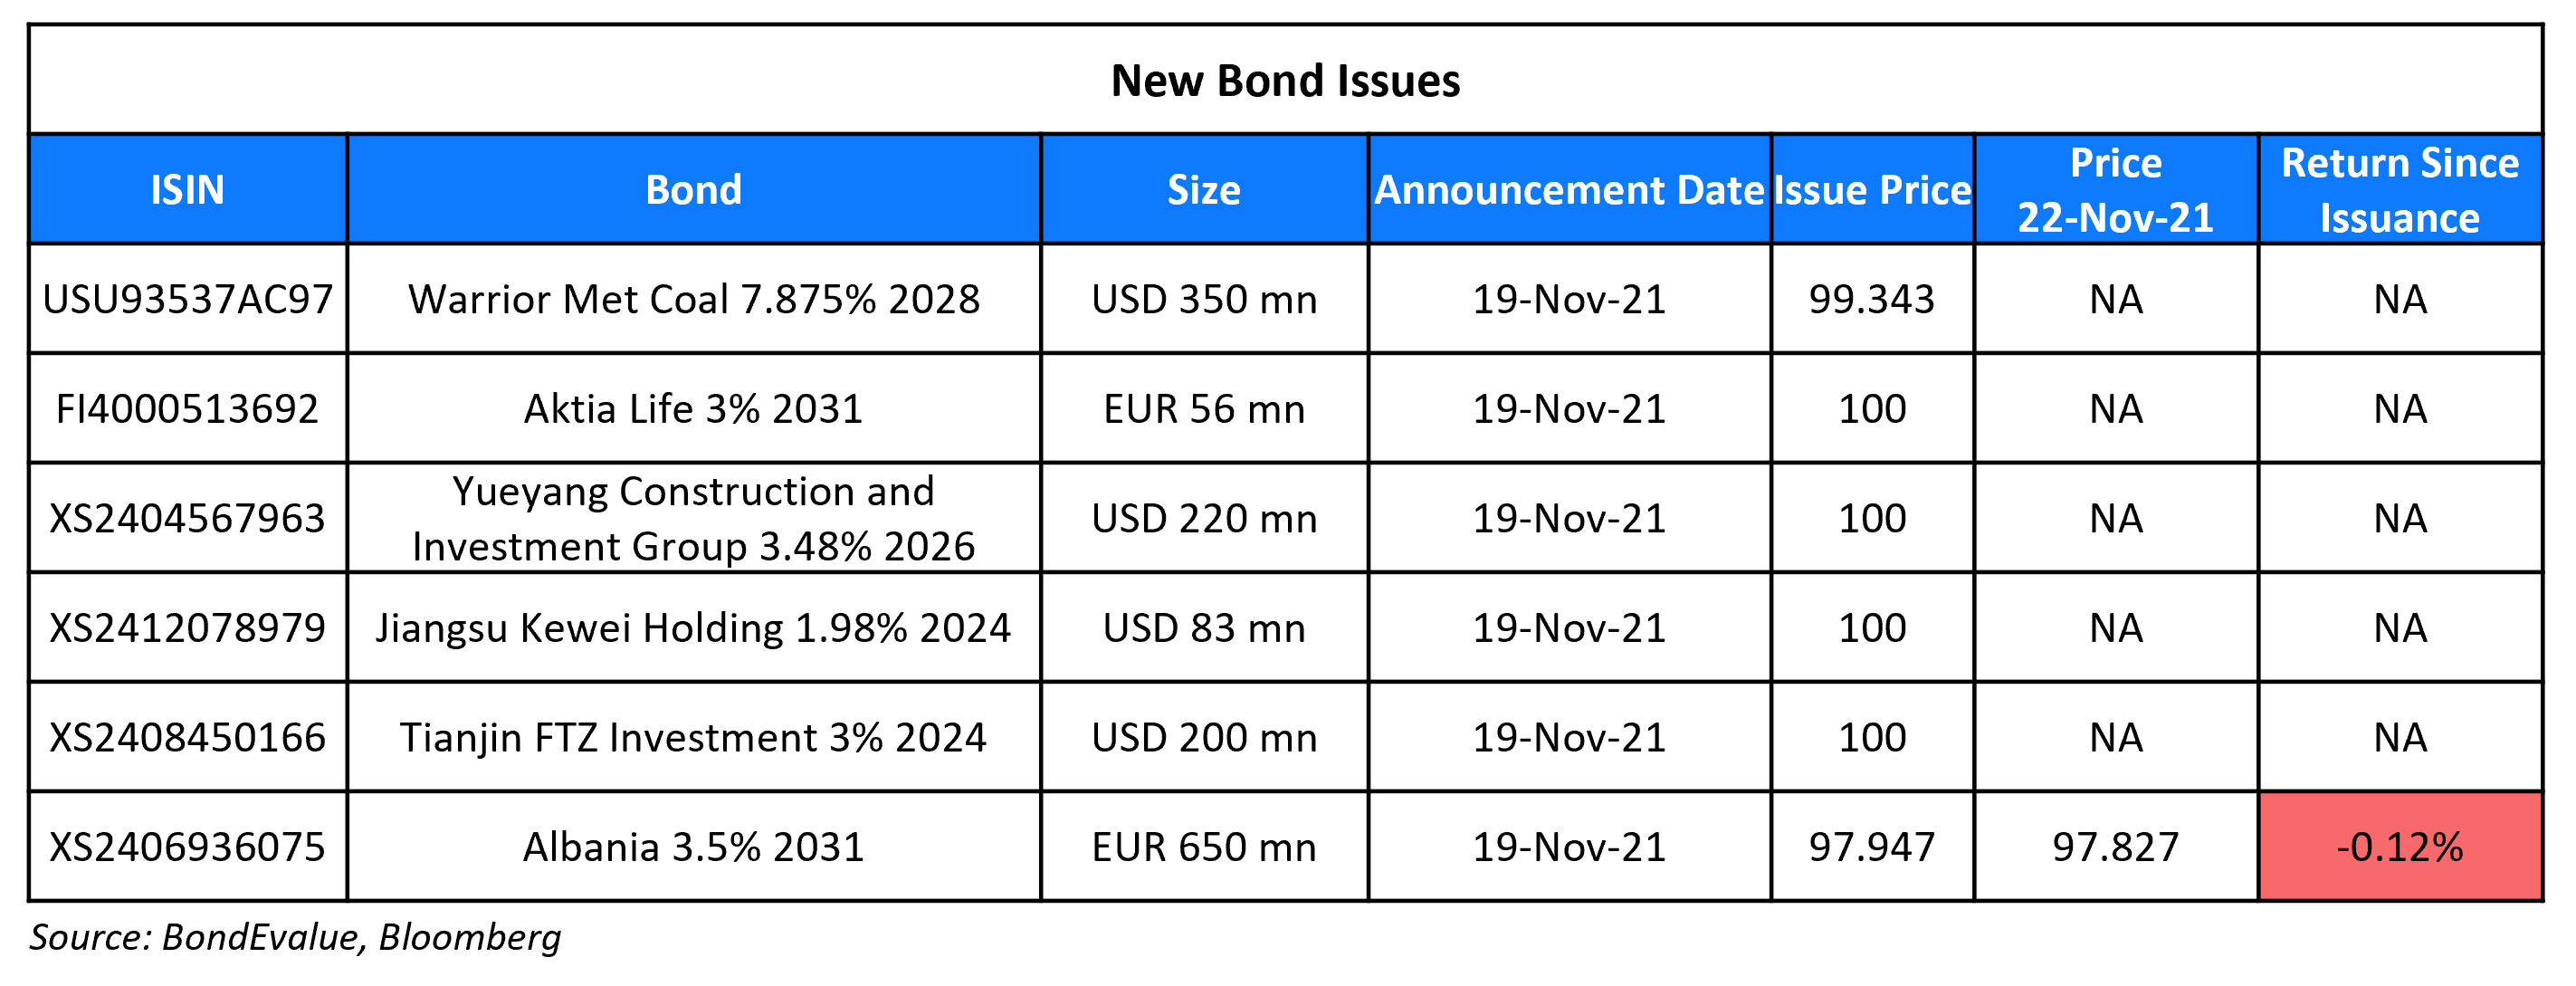 New Bond Issues 22 Nov